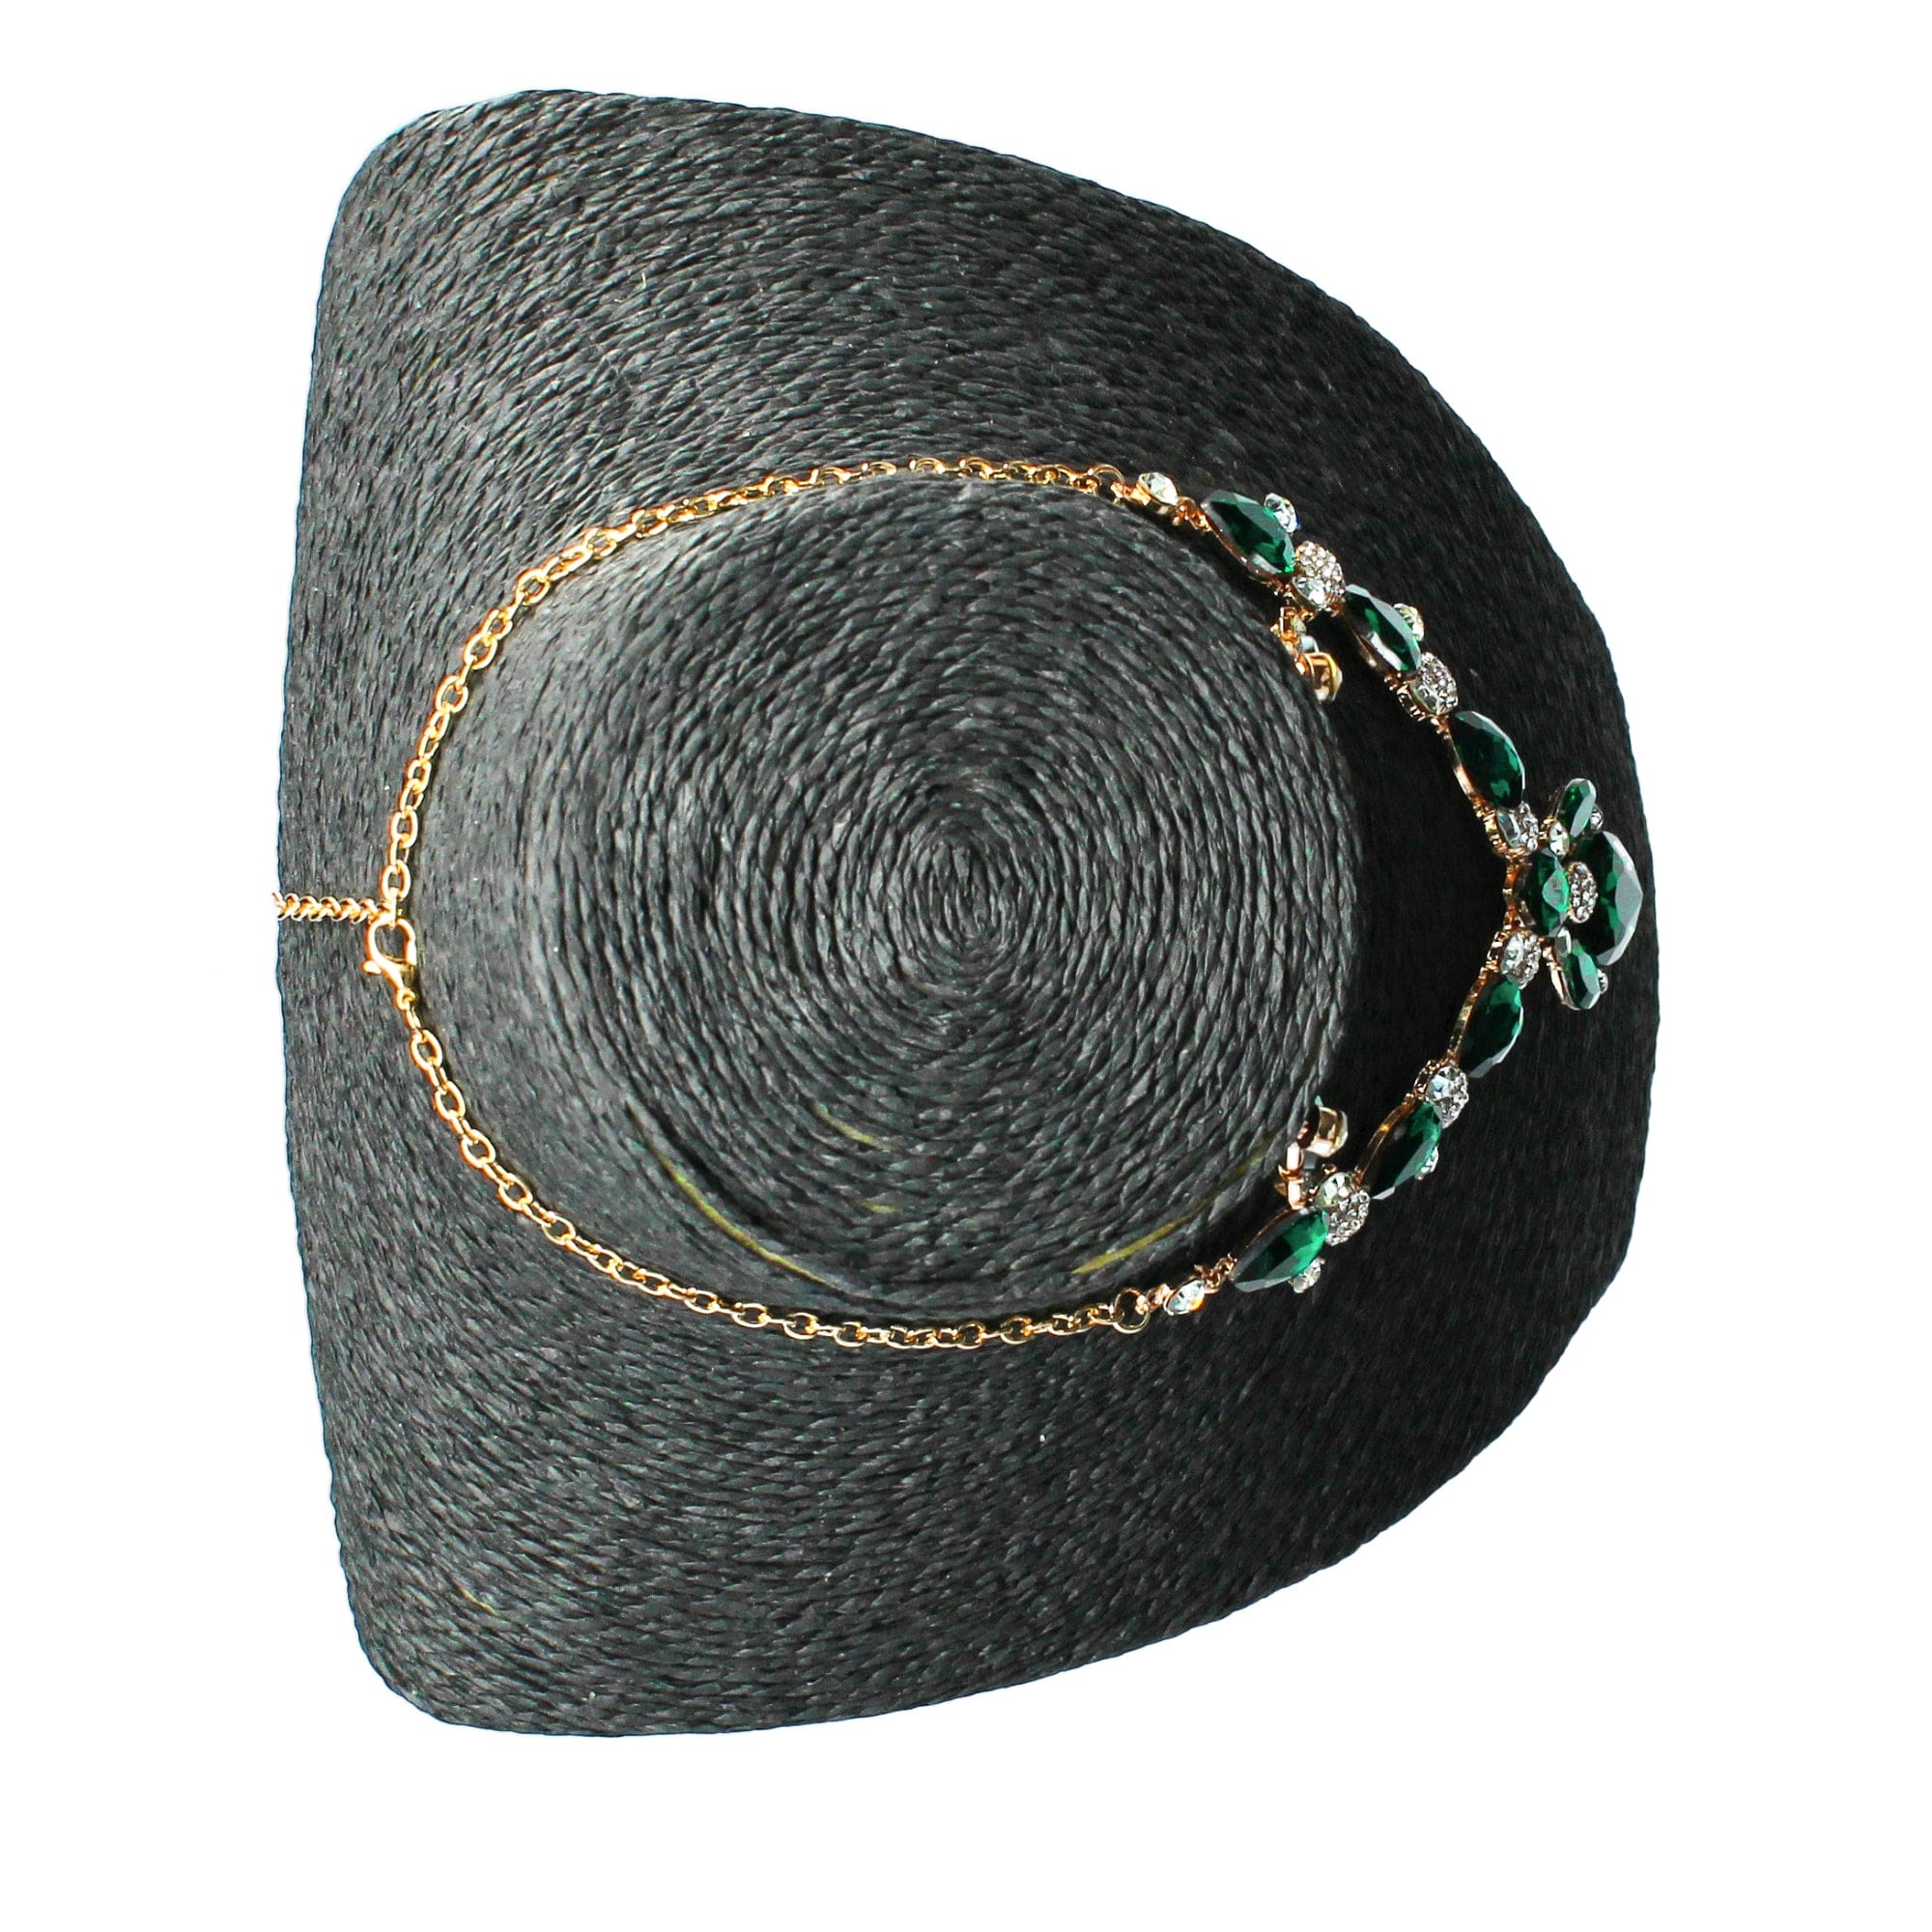 Smycken och halsband Philipine - Halsband